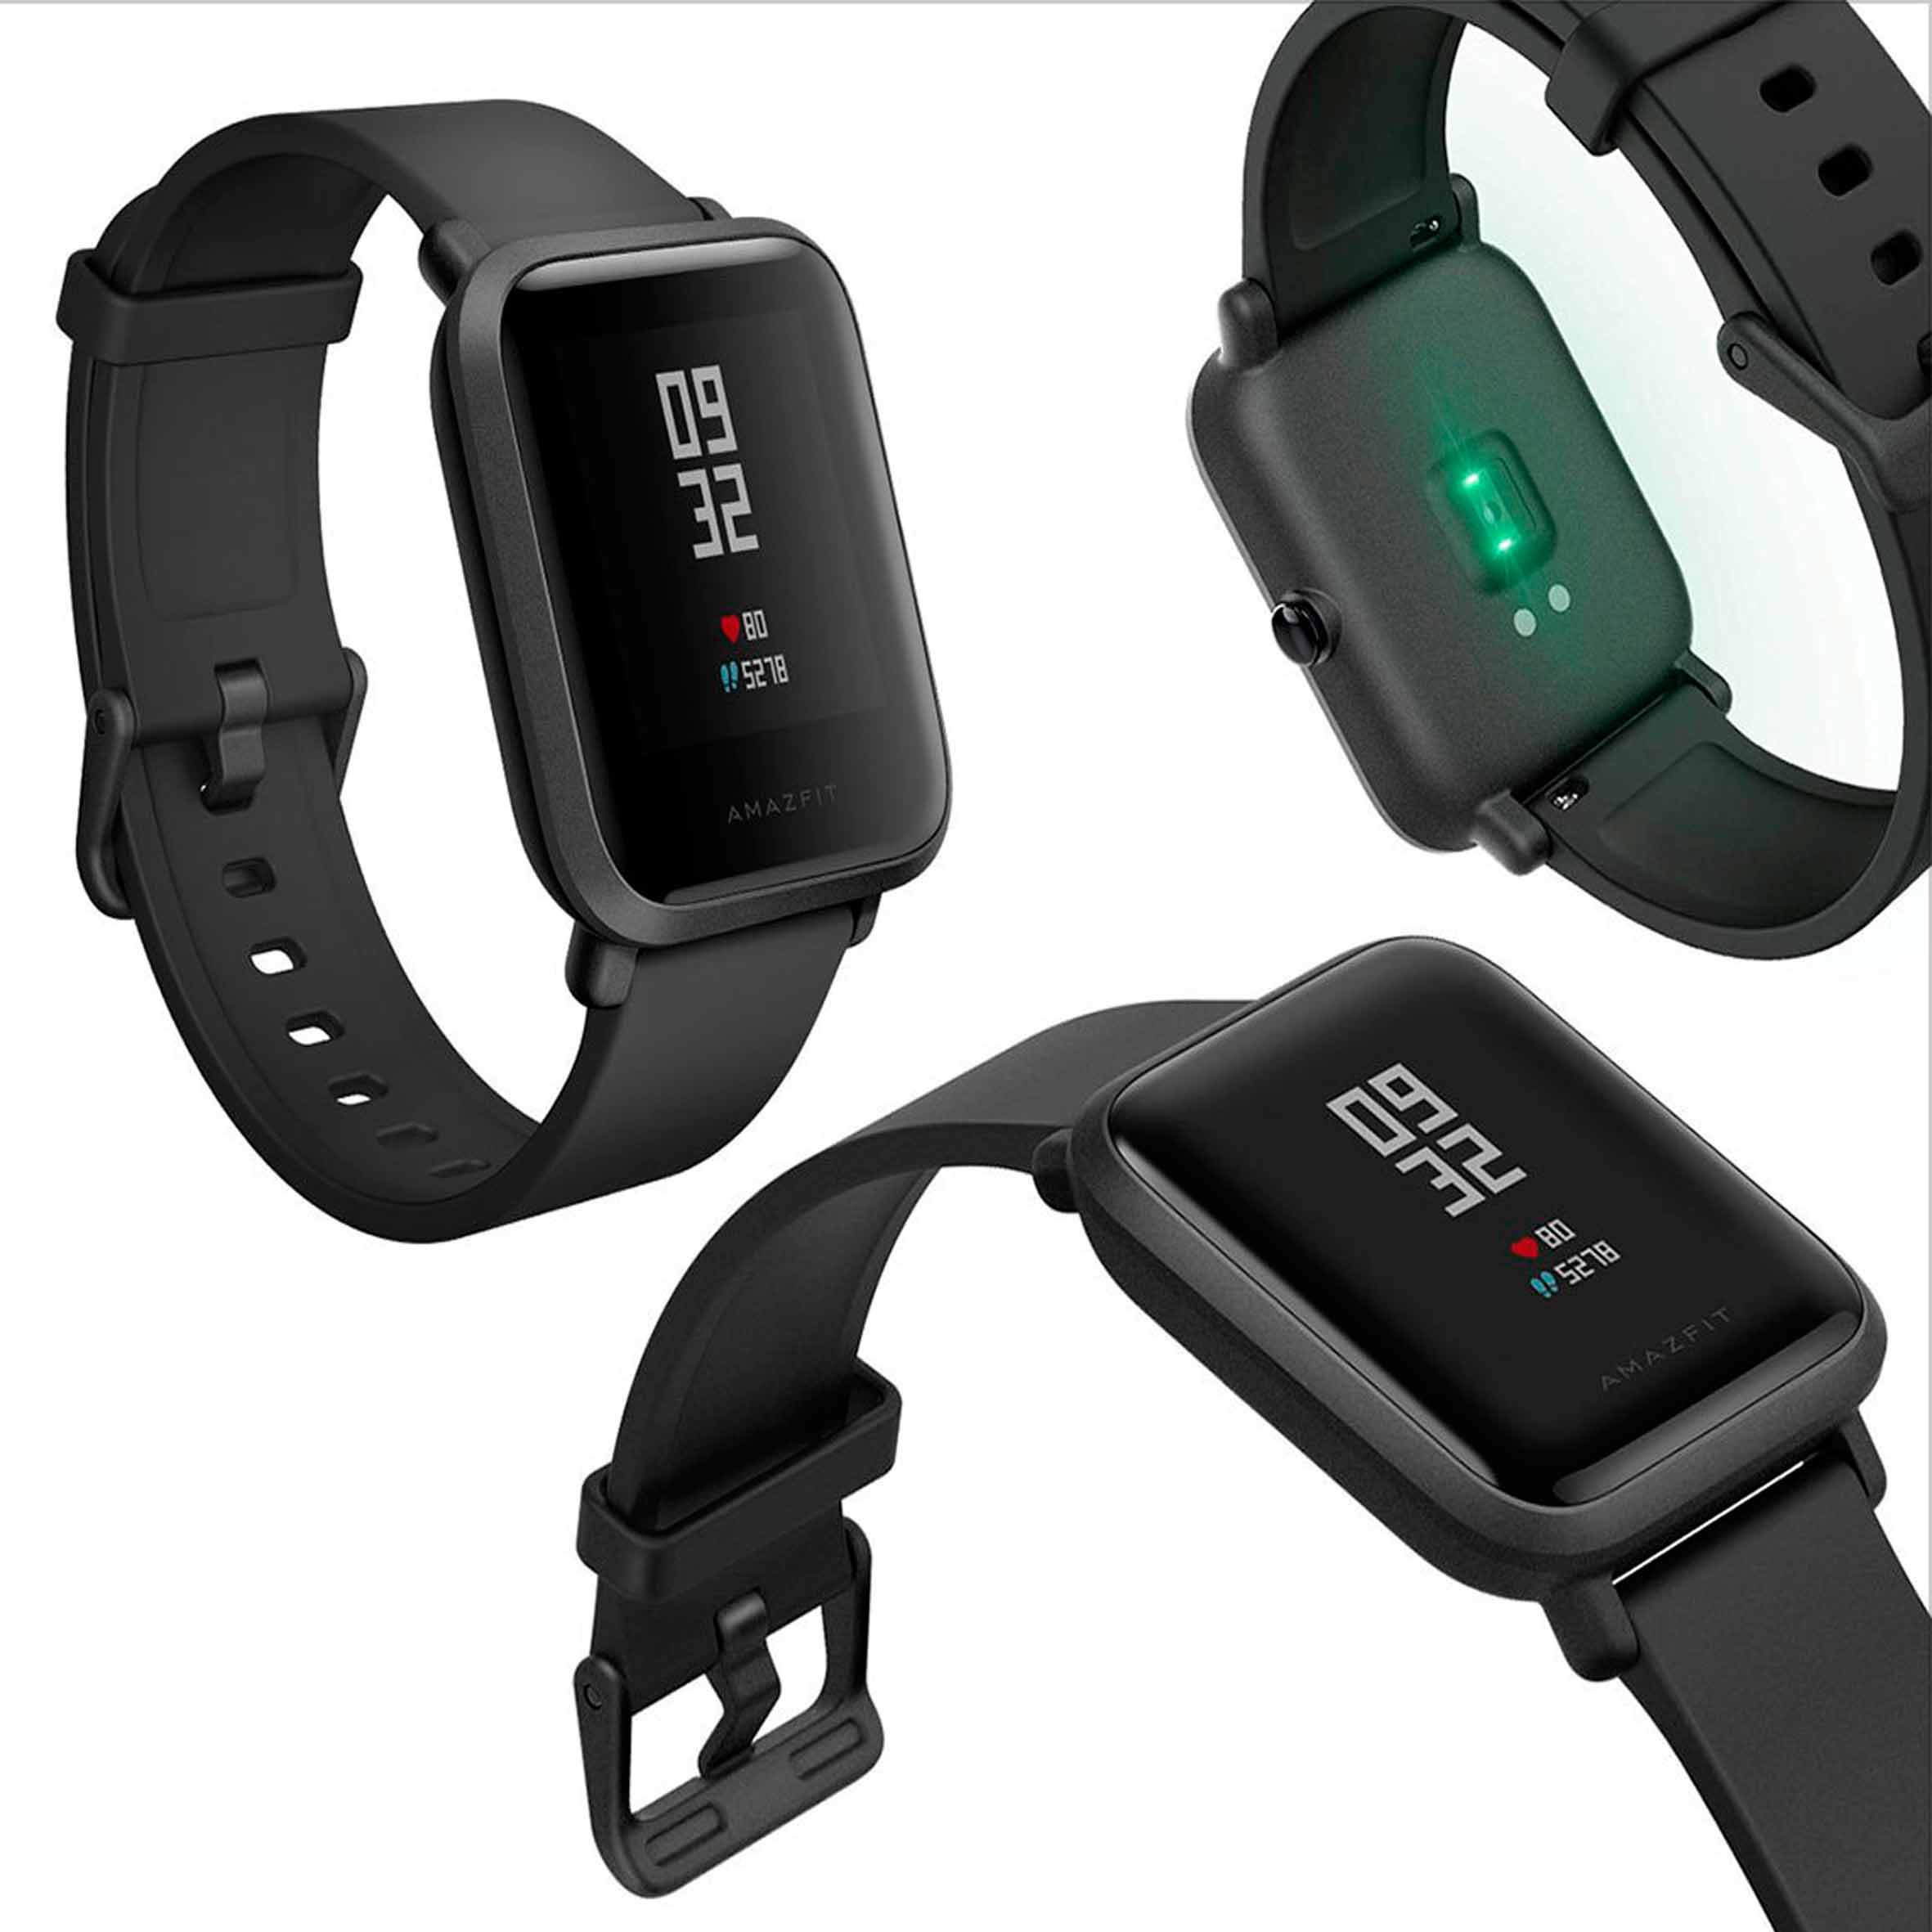 Xiaomi watch fit. Смарт-часы Amazfit Bip Black. Часы Xiaomi Amazfit Bip. Часы Xiaomi Amazfit Bip u a2017 Black. Часы Amazfit Bip s [Black].